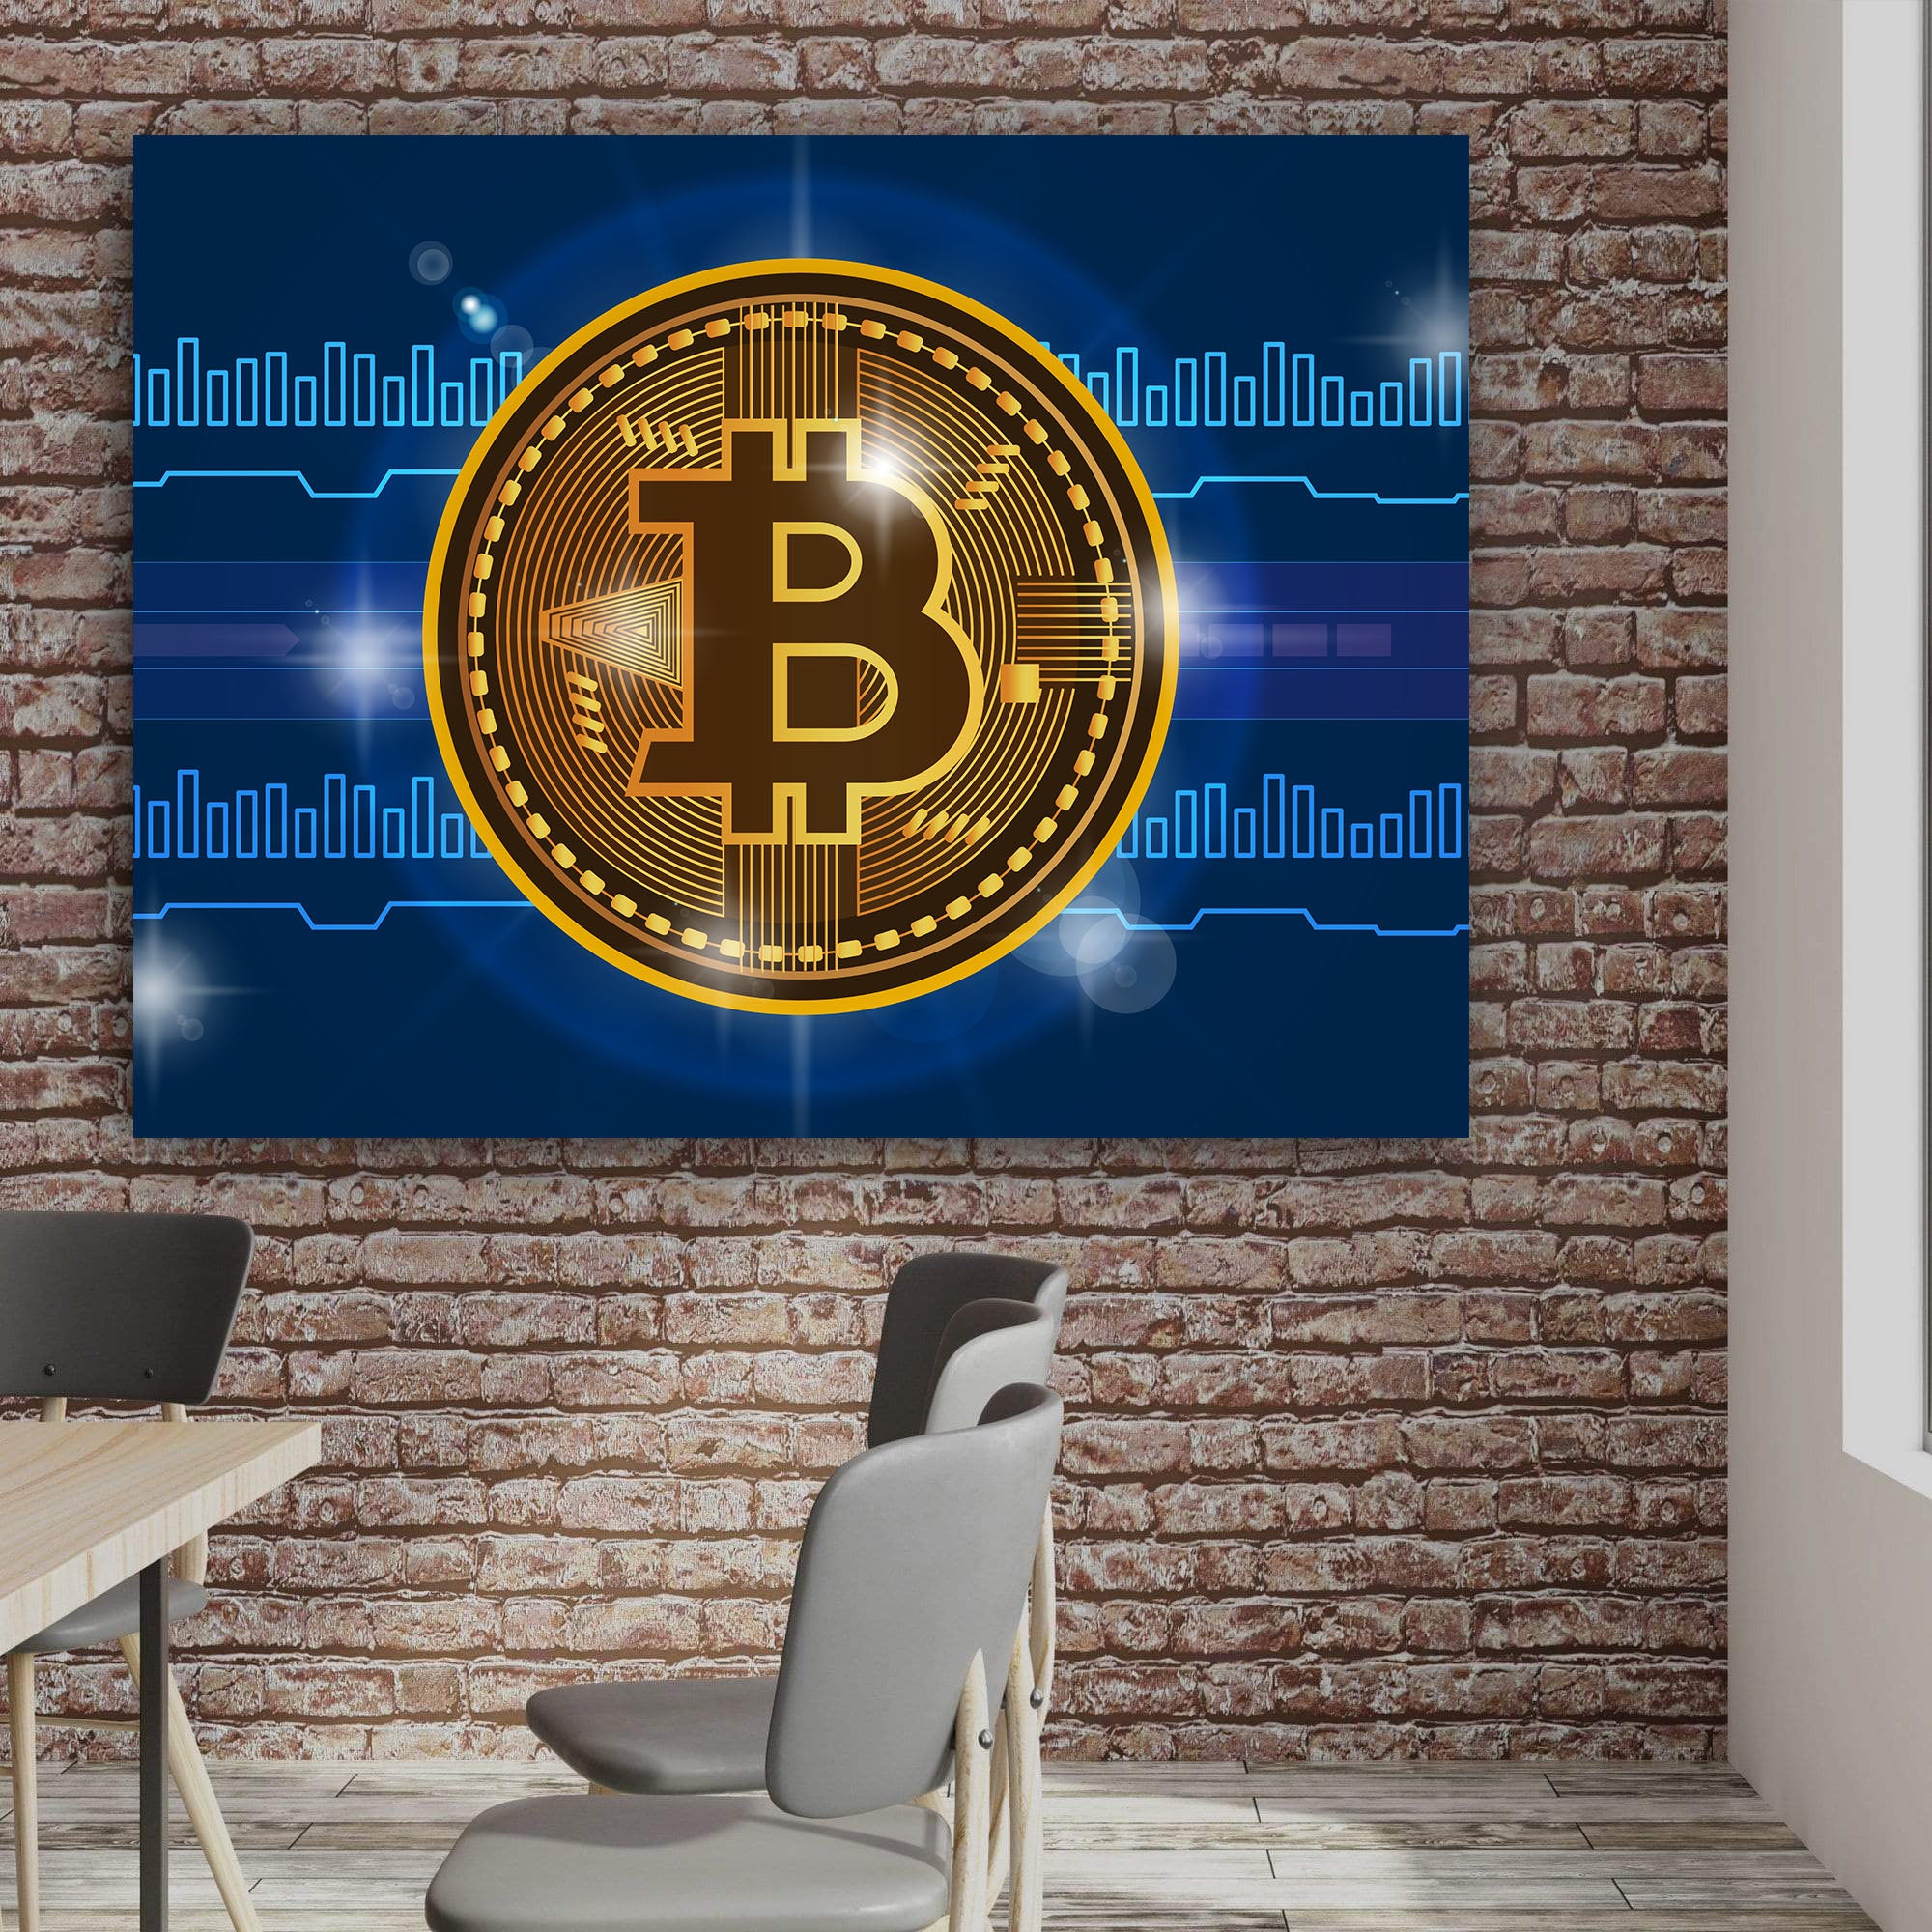 Shinning Bitcoin - Stock Buddies -Canvas Wraps